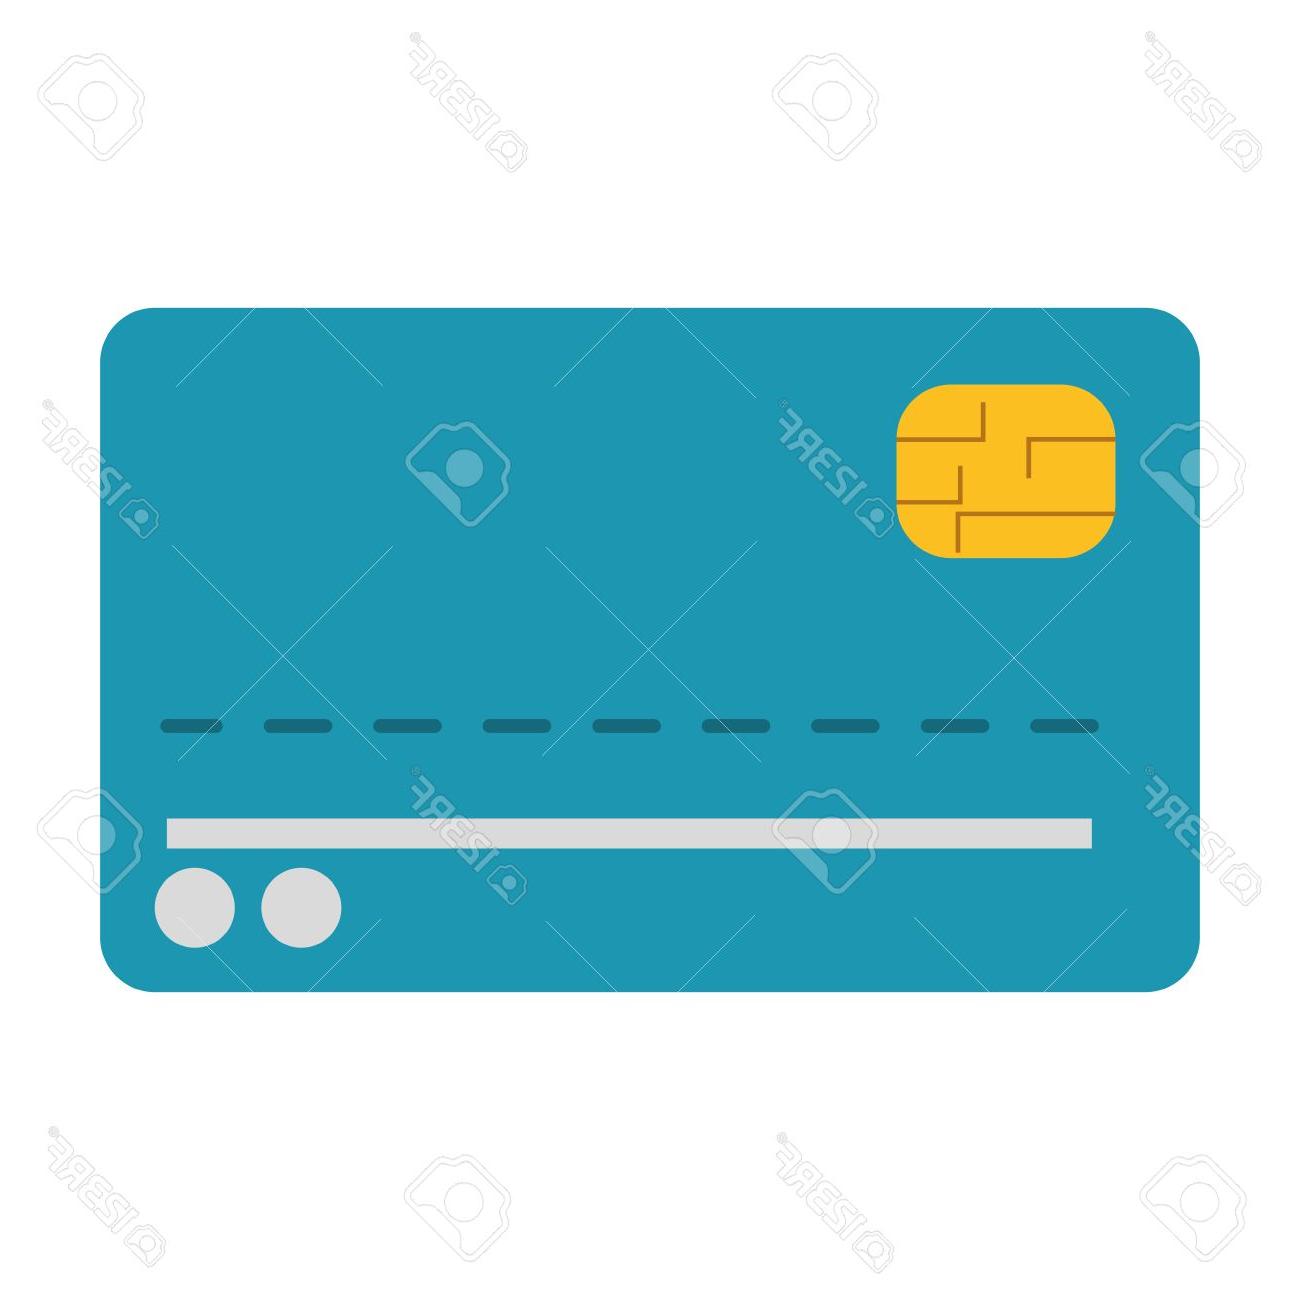 Debit Card Vector at Collection of Debit Card Vector